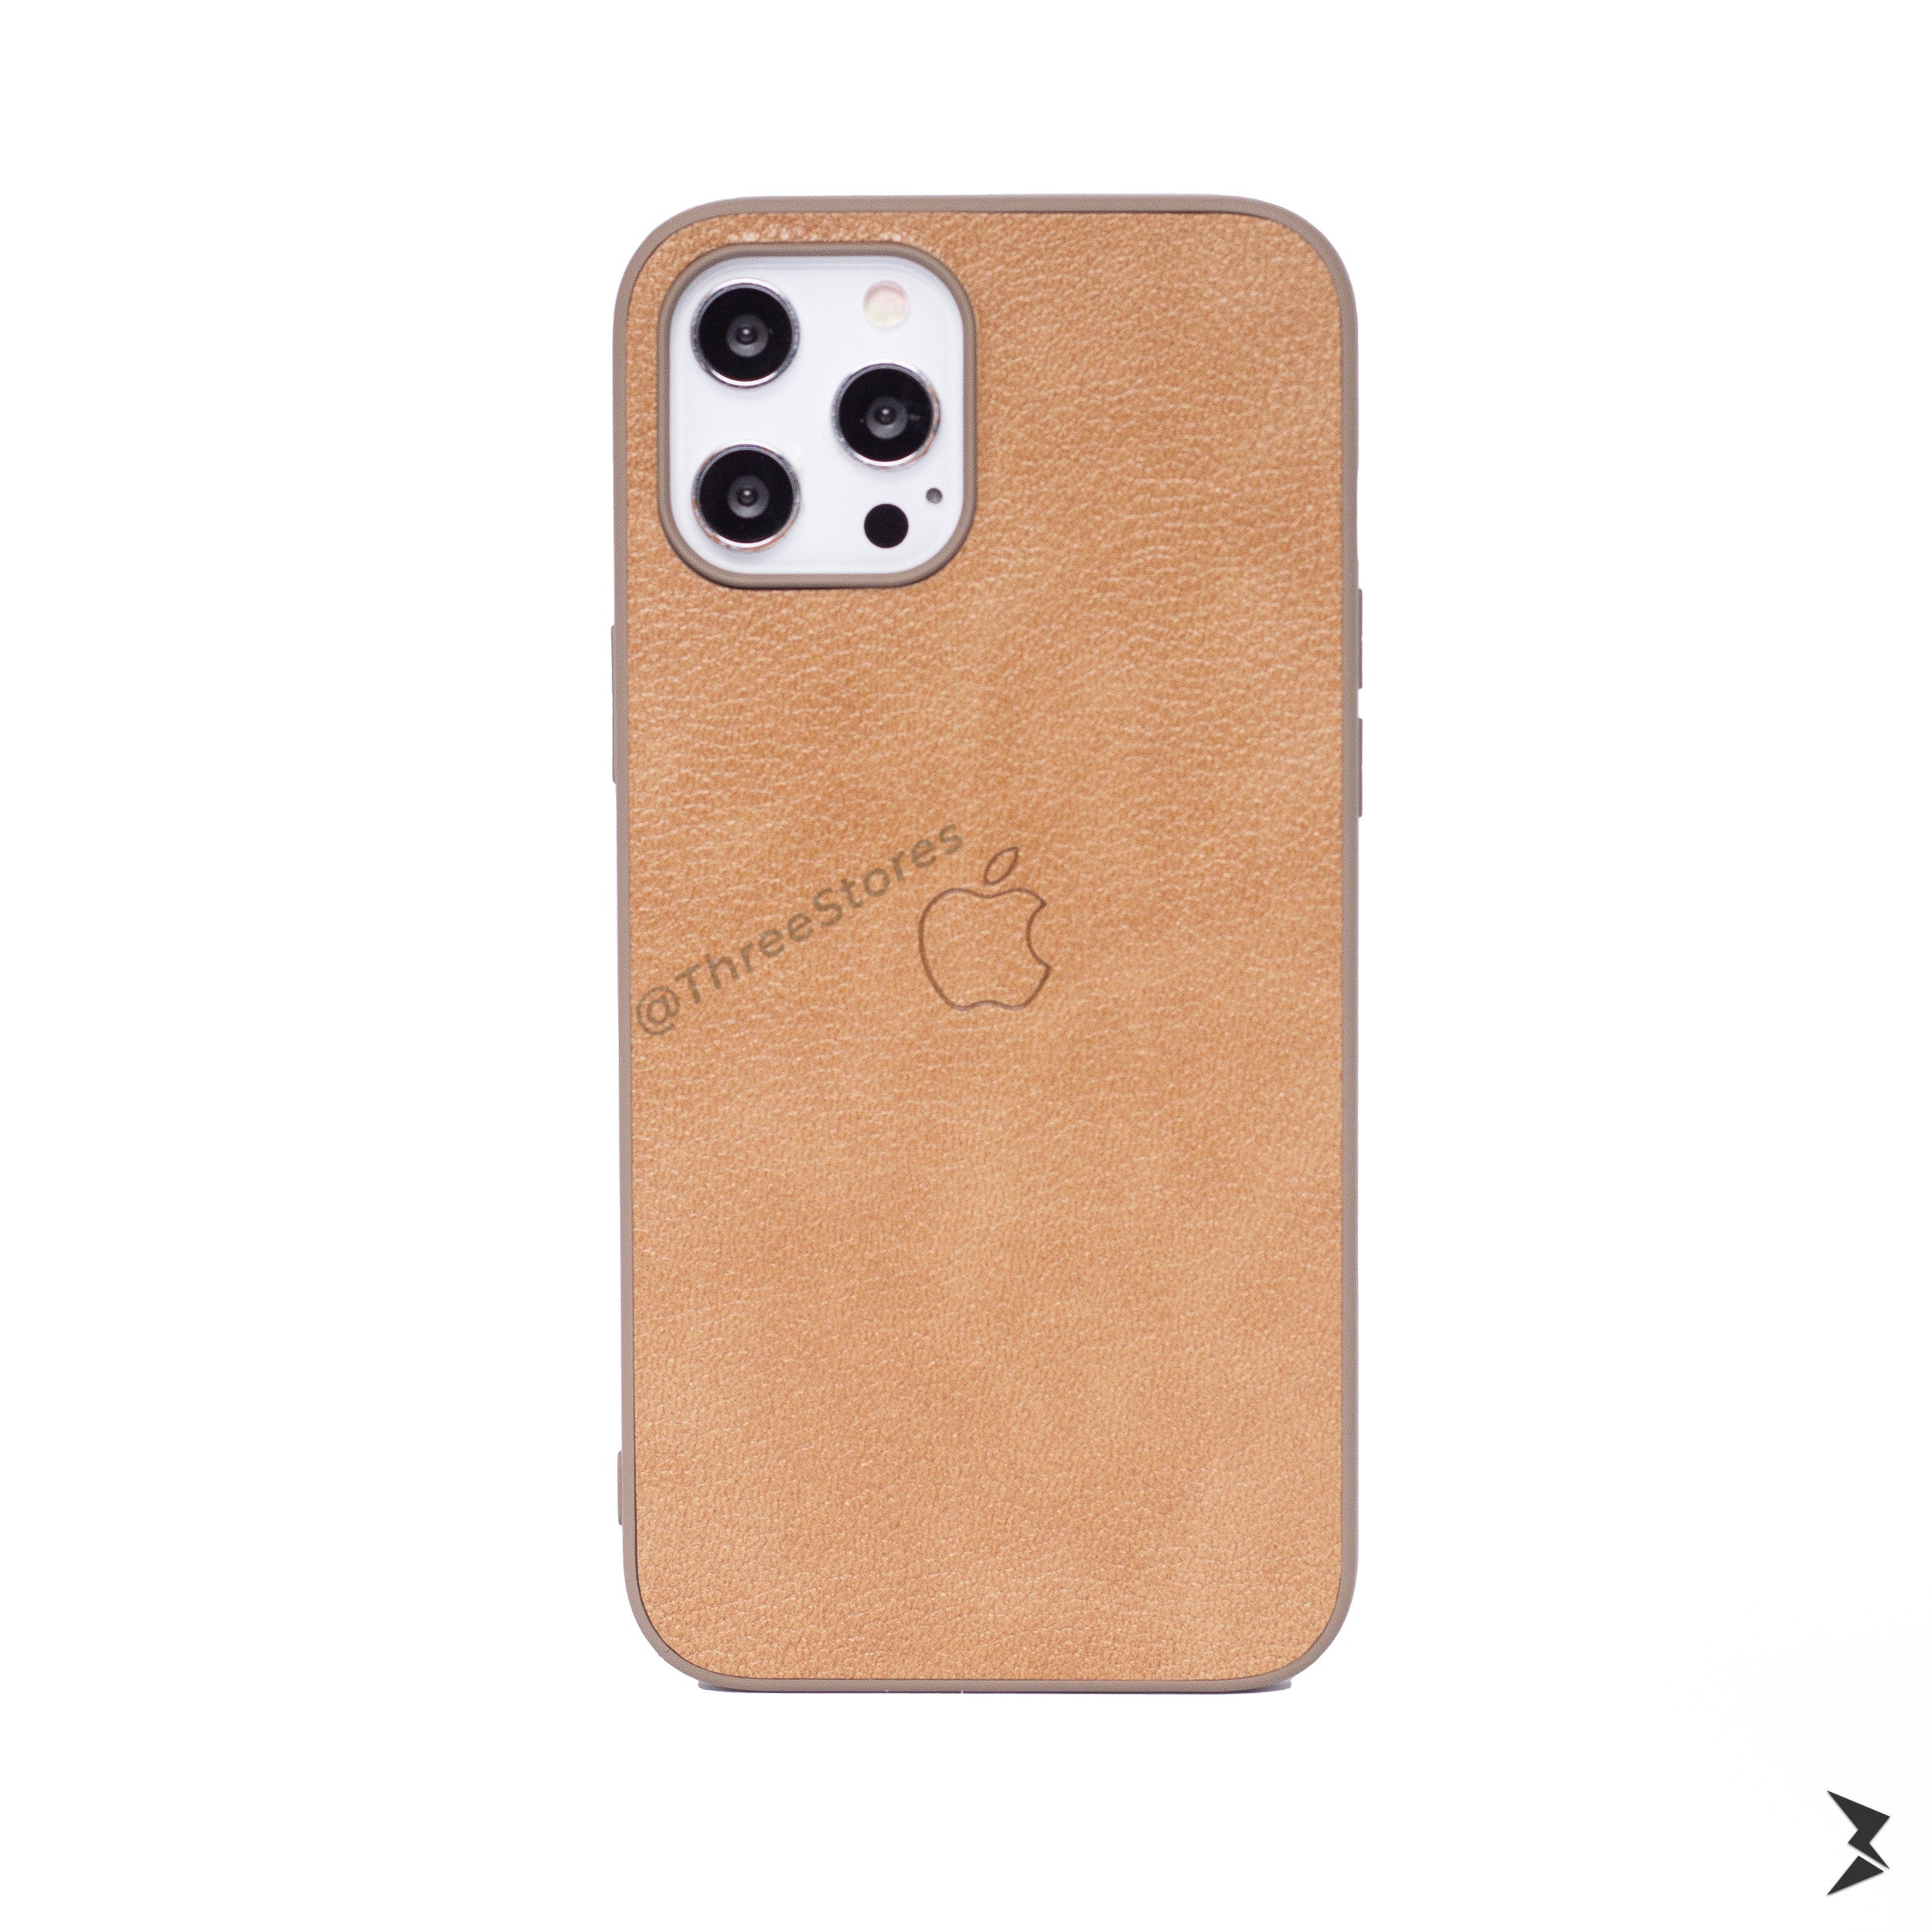 slim leather iPhone 12 pro max case